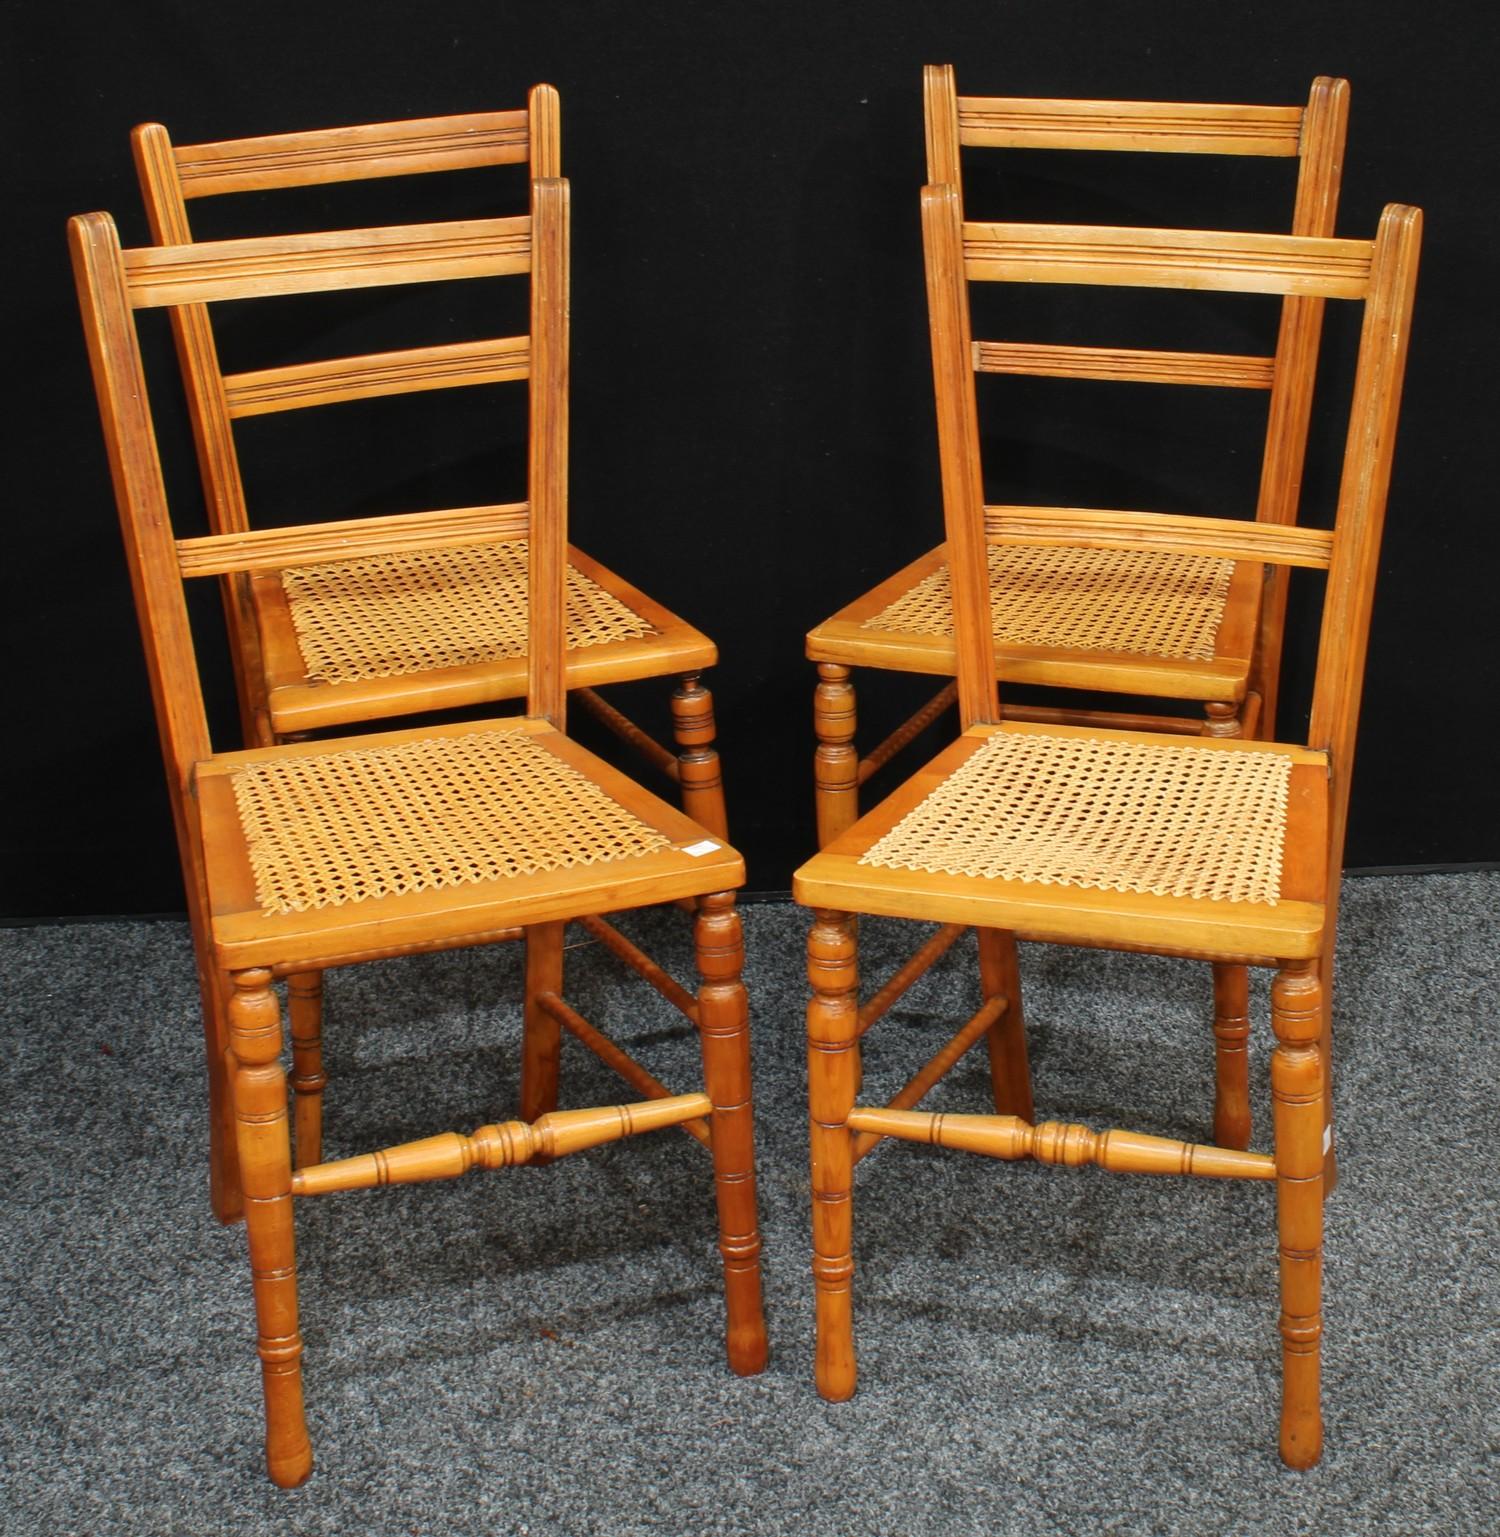 A set of four farmhouse kitchen chairs, cane topped,(4)